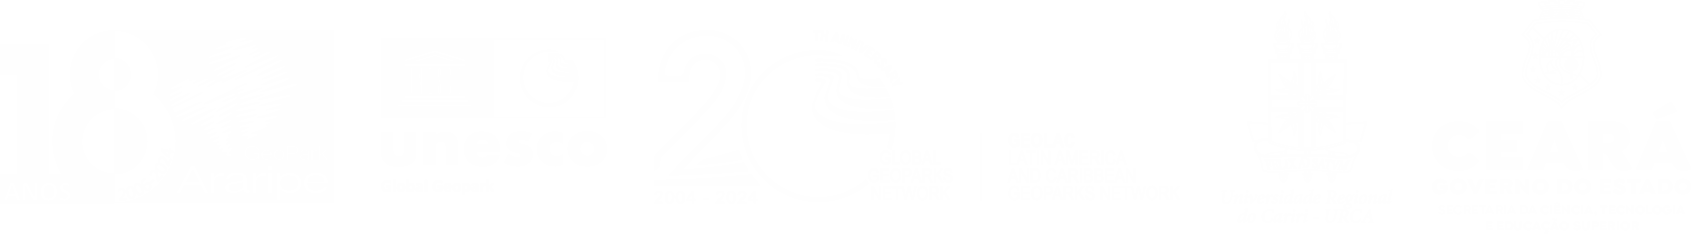 Geopark Araripe